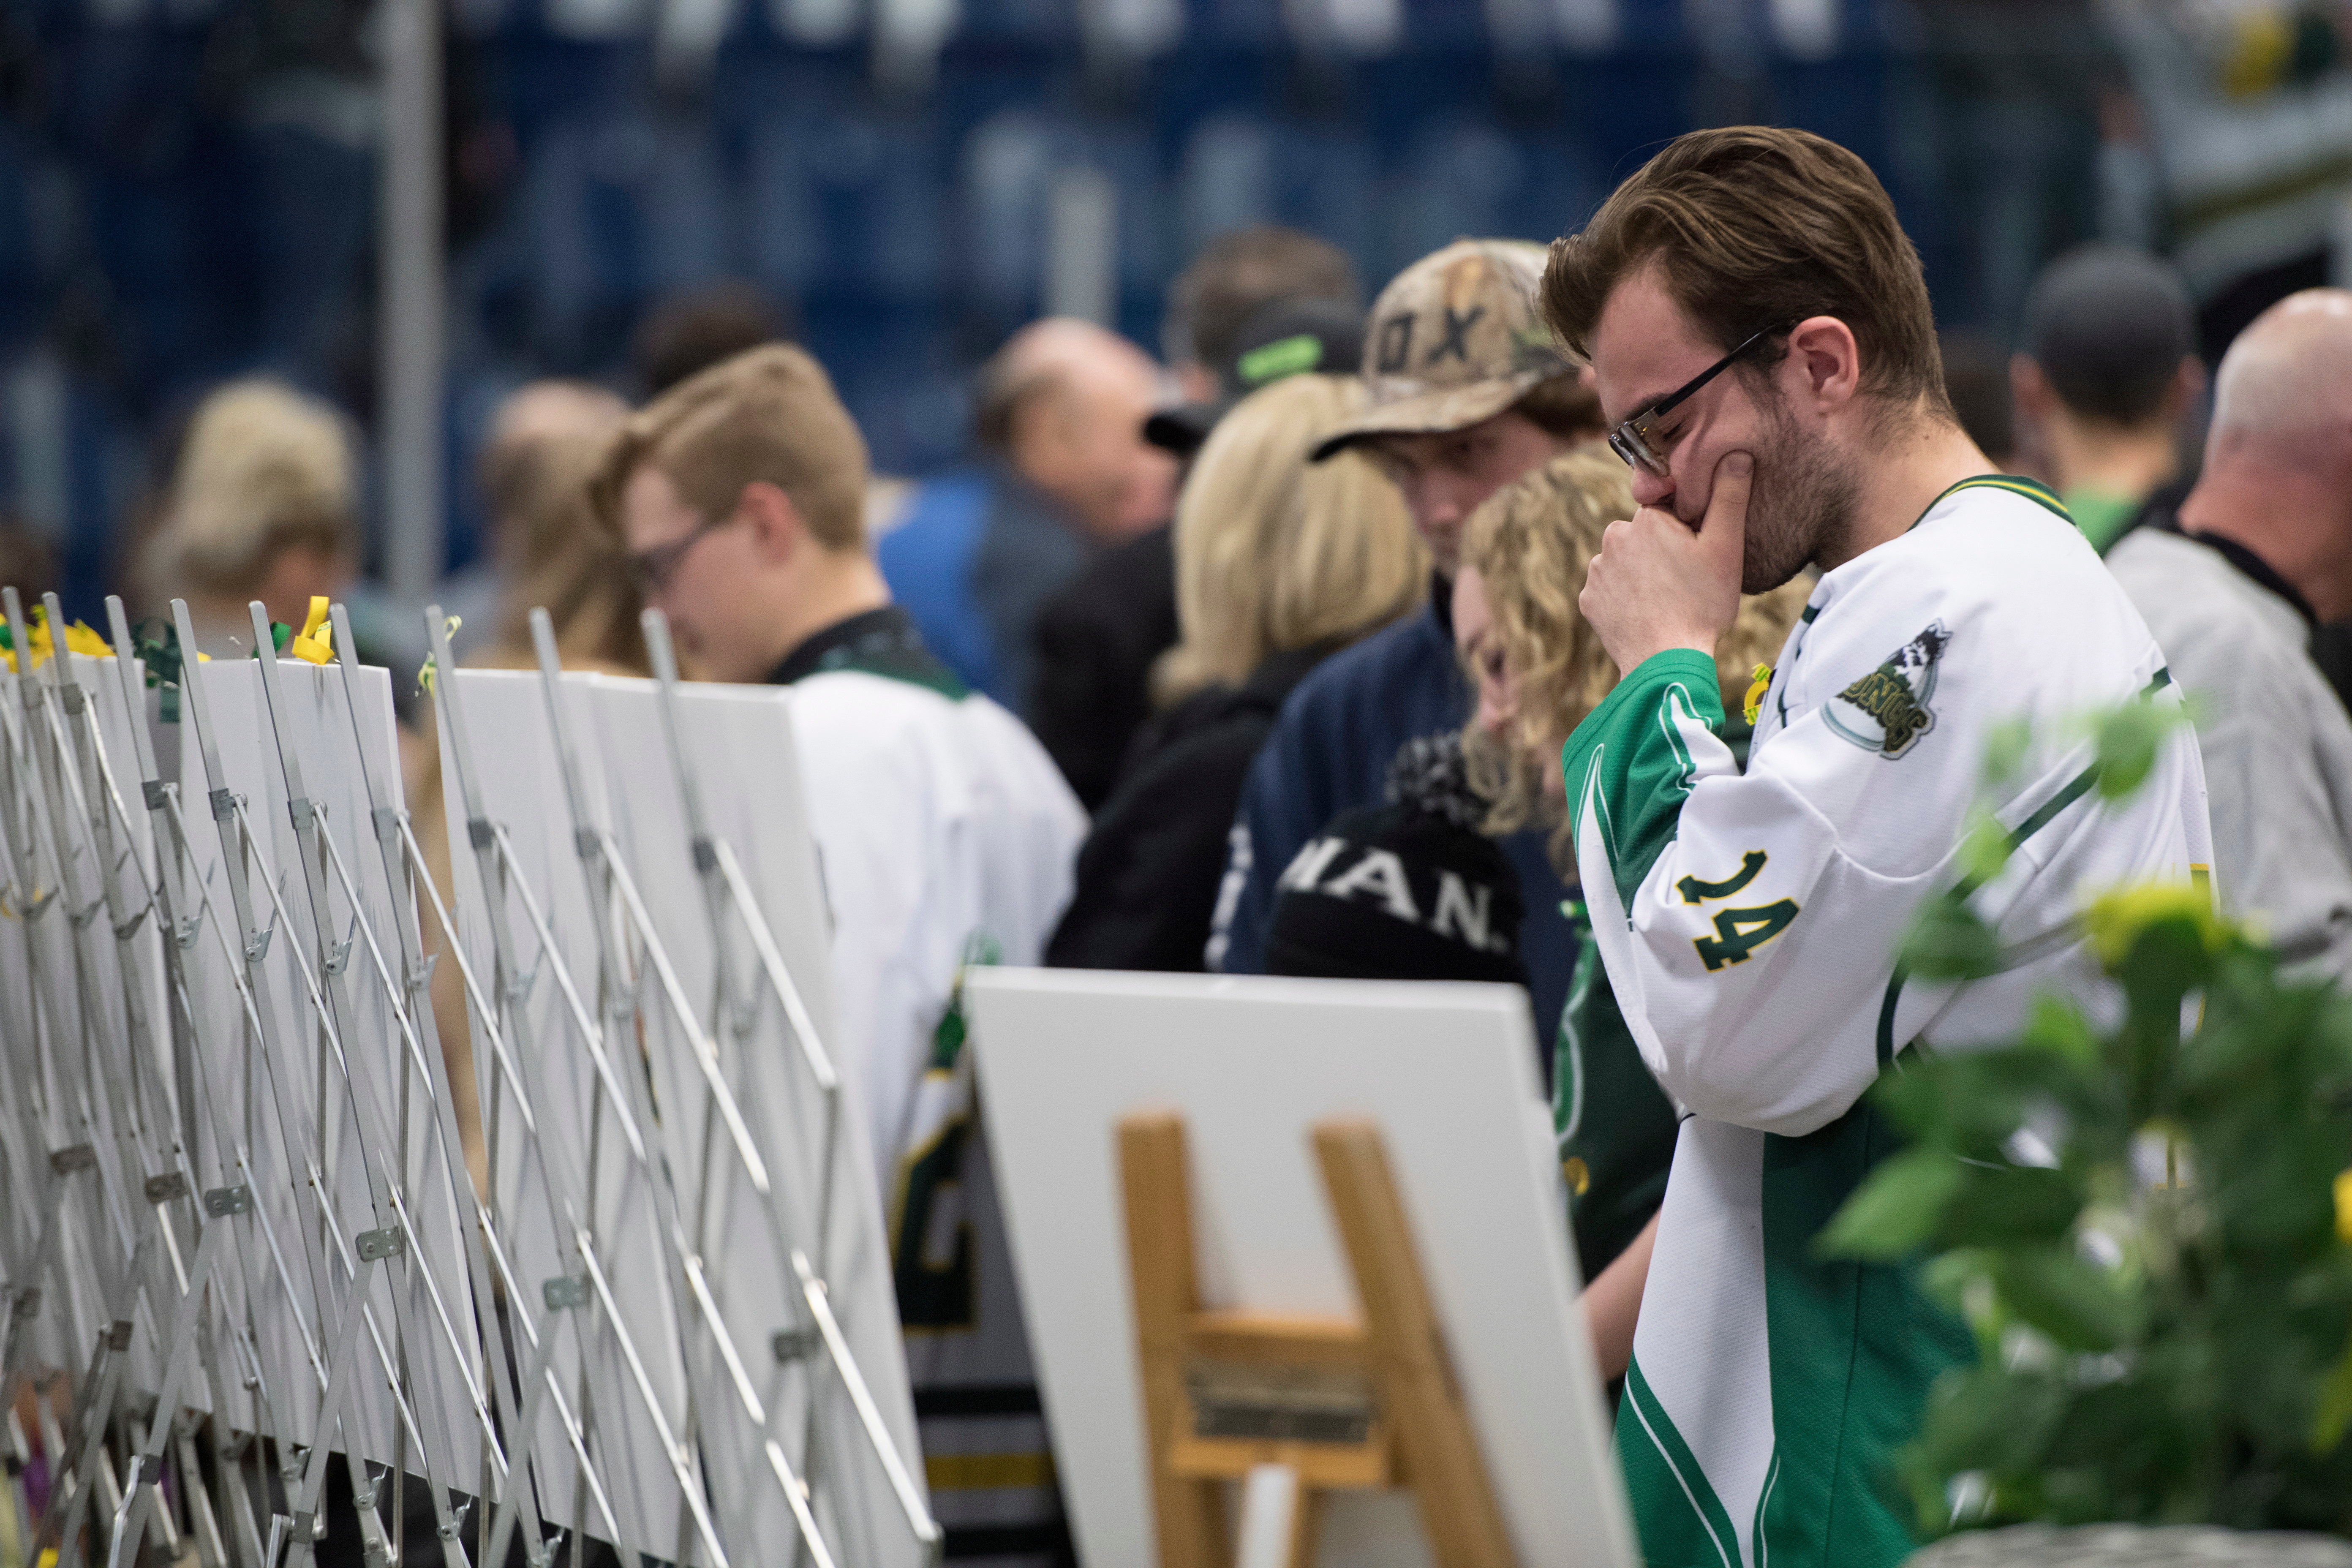 People look at photos of the victims during a vigil at the Elgar Petersen Arena (Jonathan Hayward/The Canadian Press via AP)